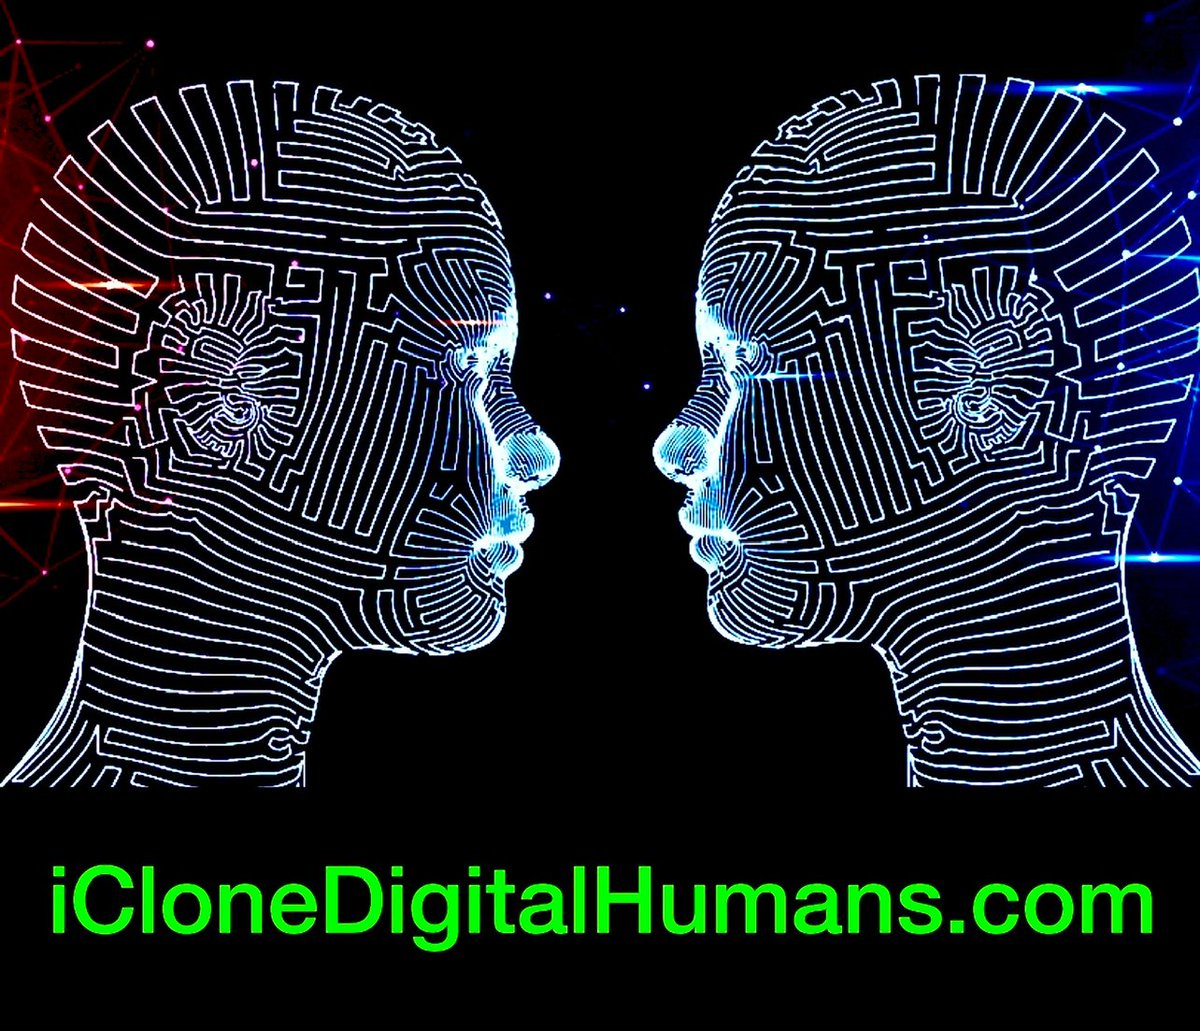 #ArtificialIntelligence #dna #chatgpt #cloning #AI #humanity #didgitalclones #elon #ElonMusk #MedicalStudents #futurehumans #DigitalTwins #Tech4All #medical #MedicalResearch #MedicalStudents #MedicalEducation #Health #HealthTech #HealthForAll #Humans #technology #digitalhumans